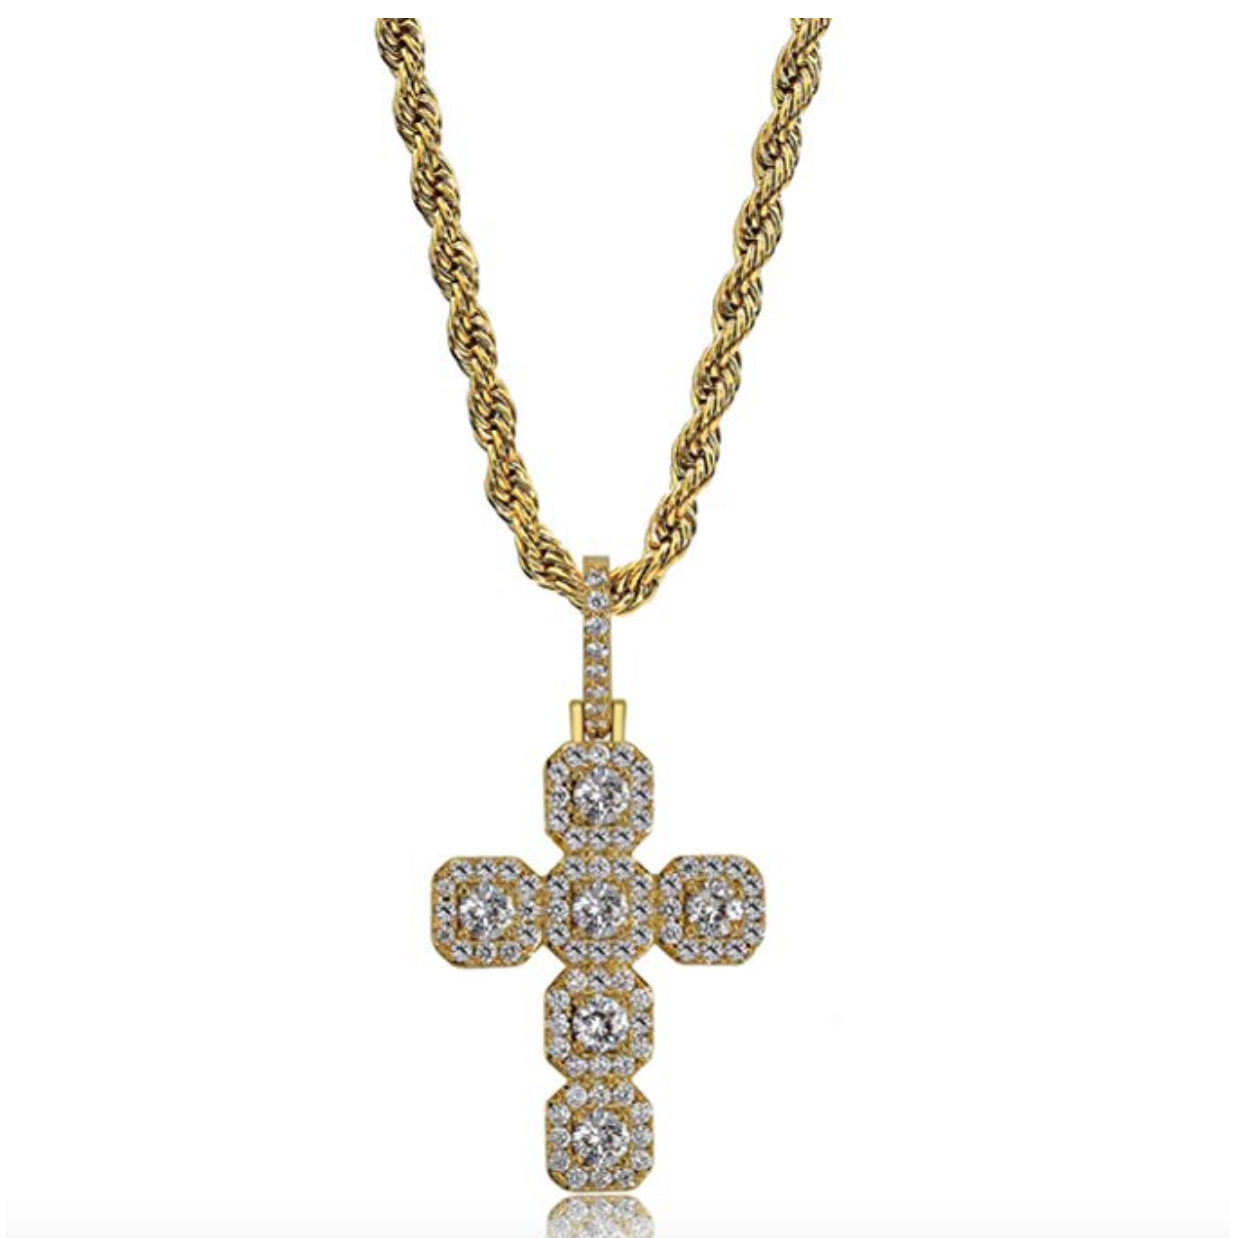 Baguette Square Cross Diamond Pendant Men Cross Necklace Silver Jewelry Iced Out Baguette Gold